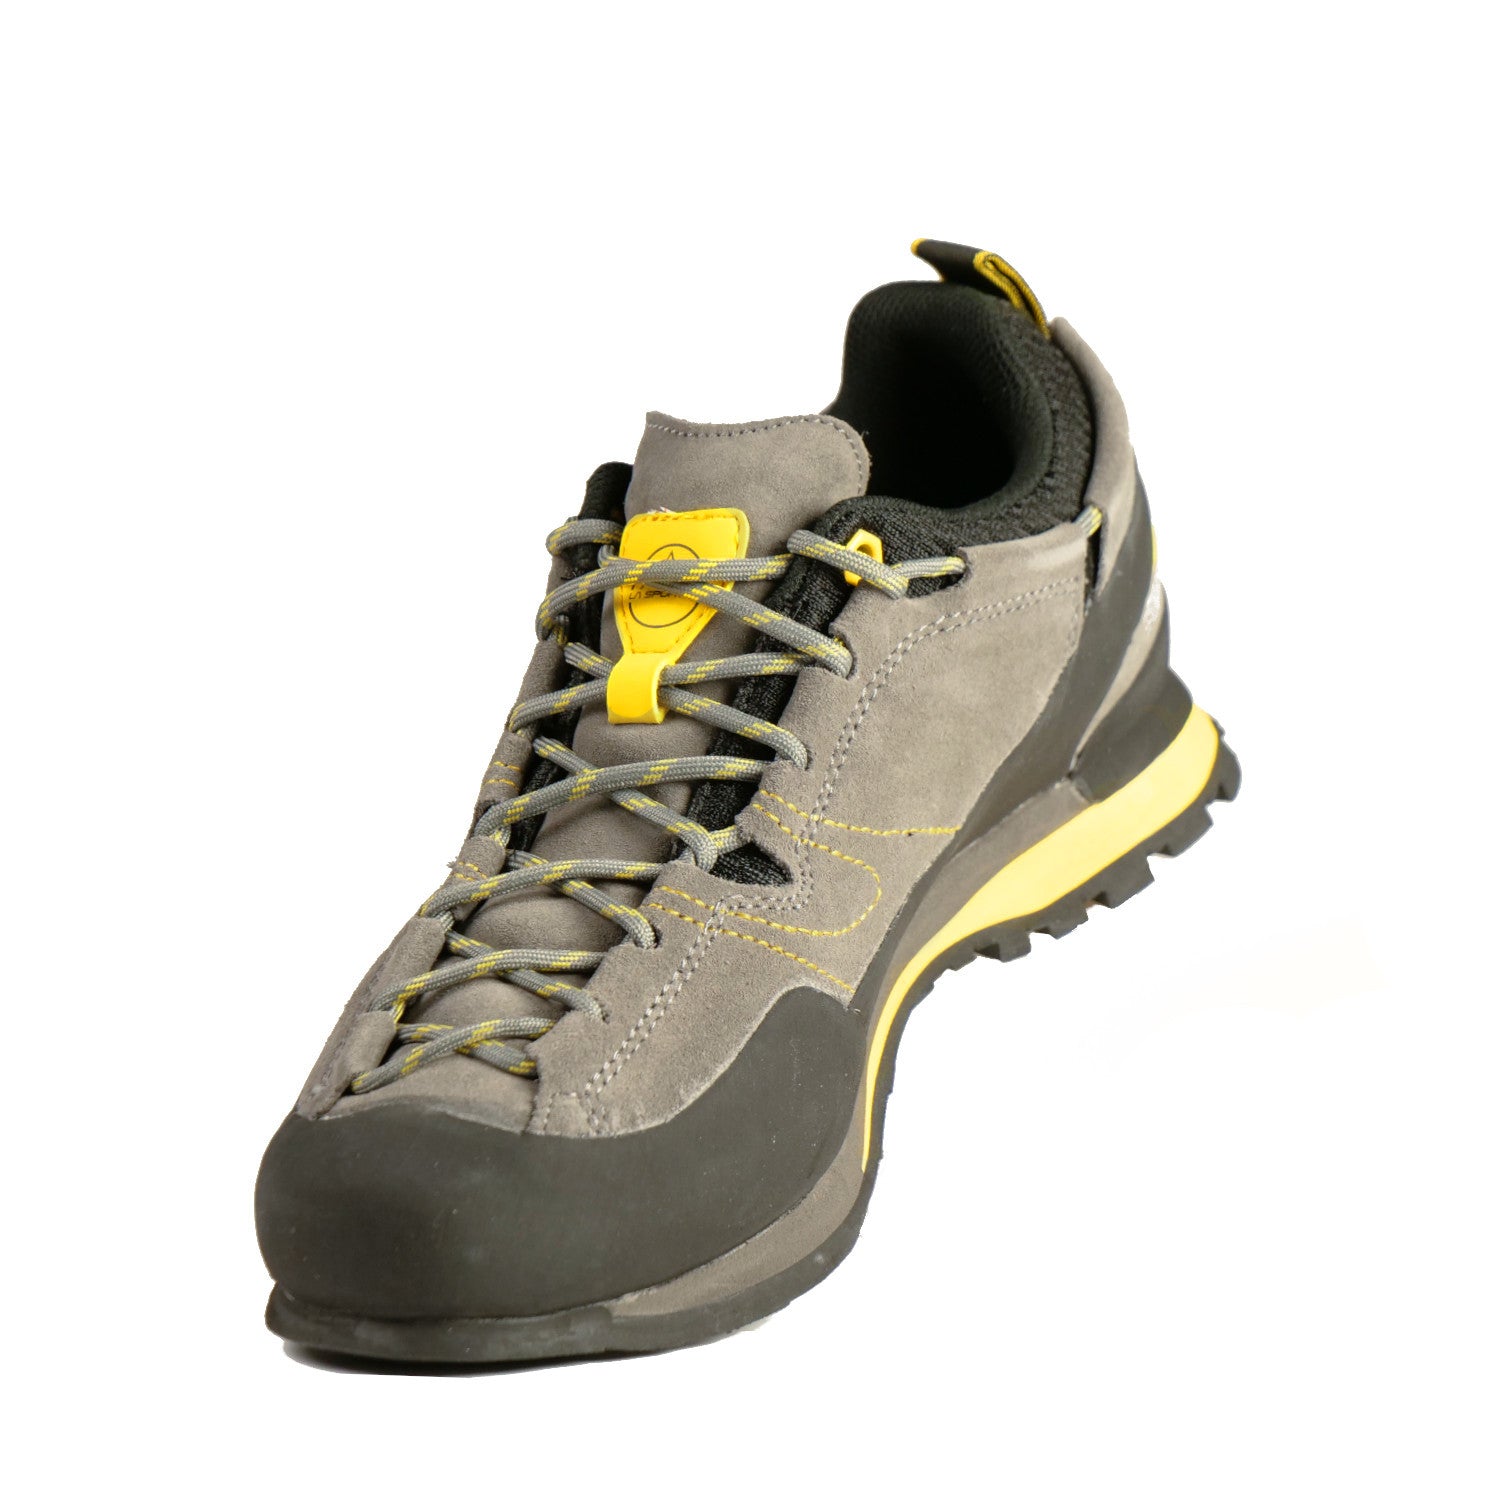 La Sportiva Boulder X Mens Hiking Boots - Trekking Shoes - Shoes & Poles -  Outdoor - All